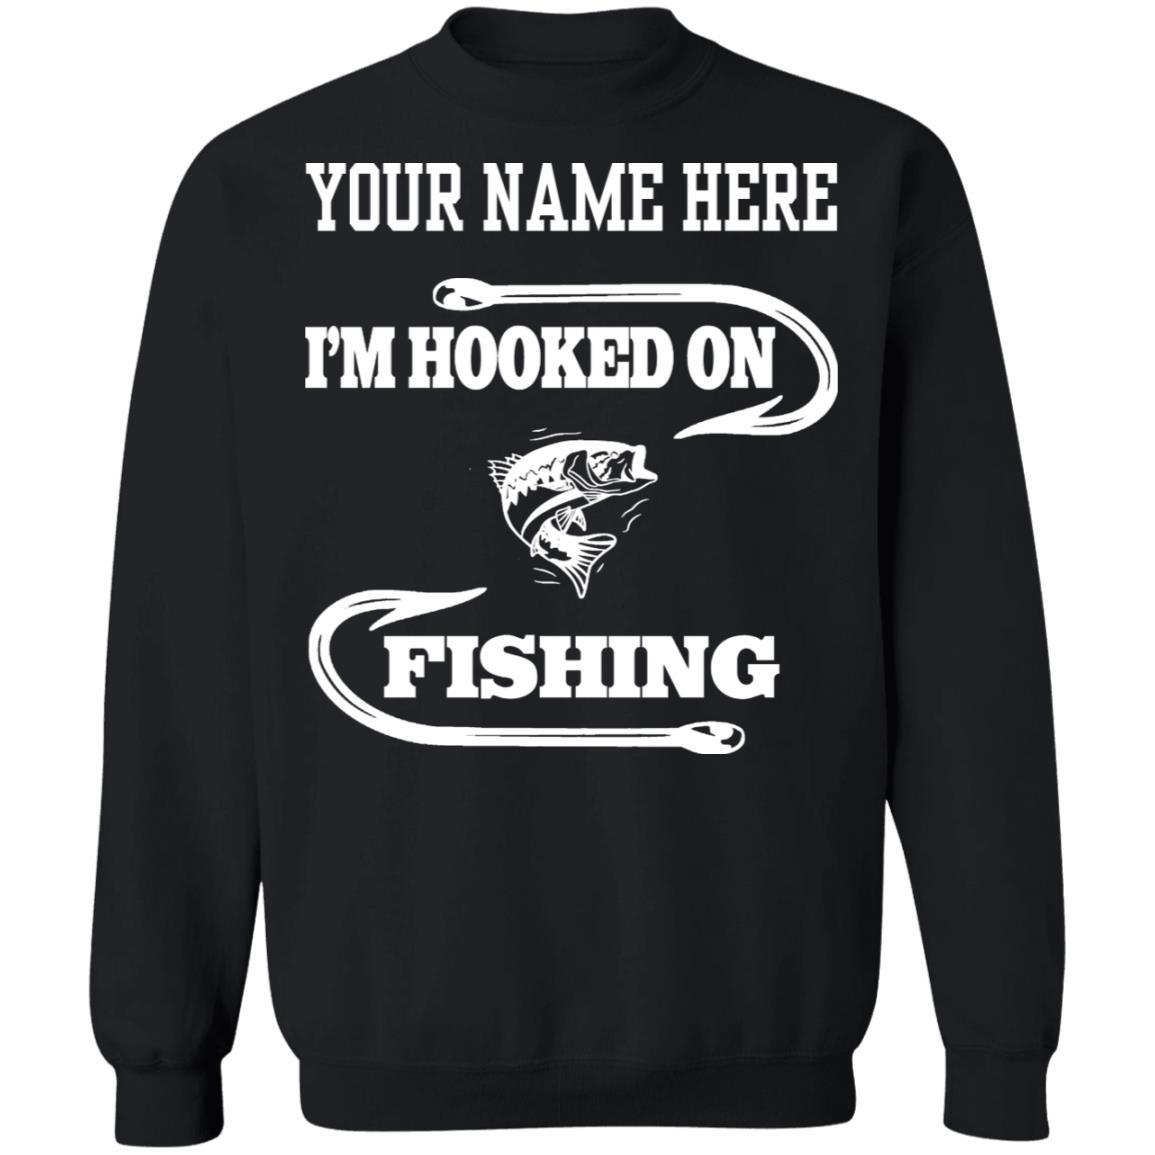 I'm hooked on fishing sweatshirt black